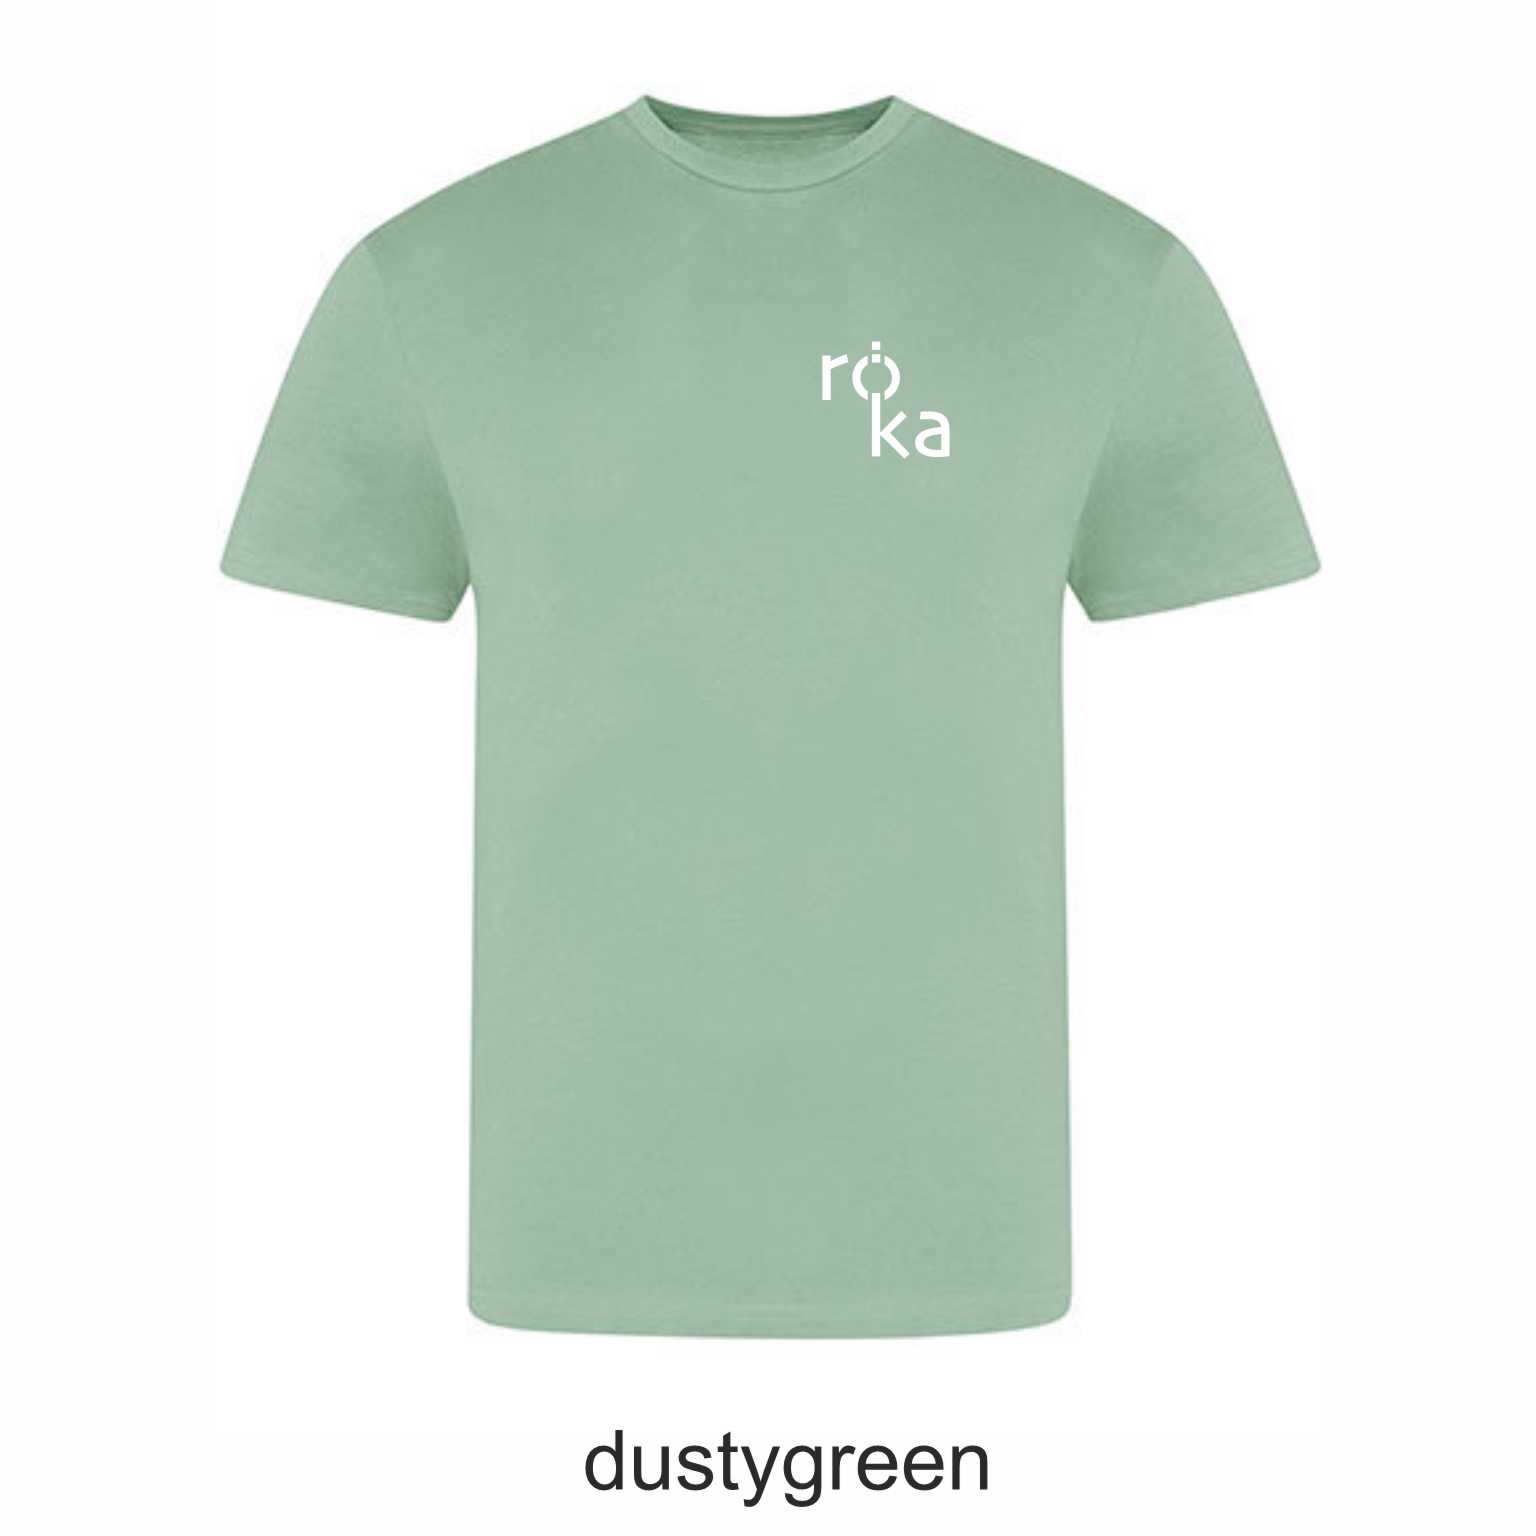 T-Shirt dustygreen